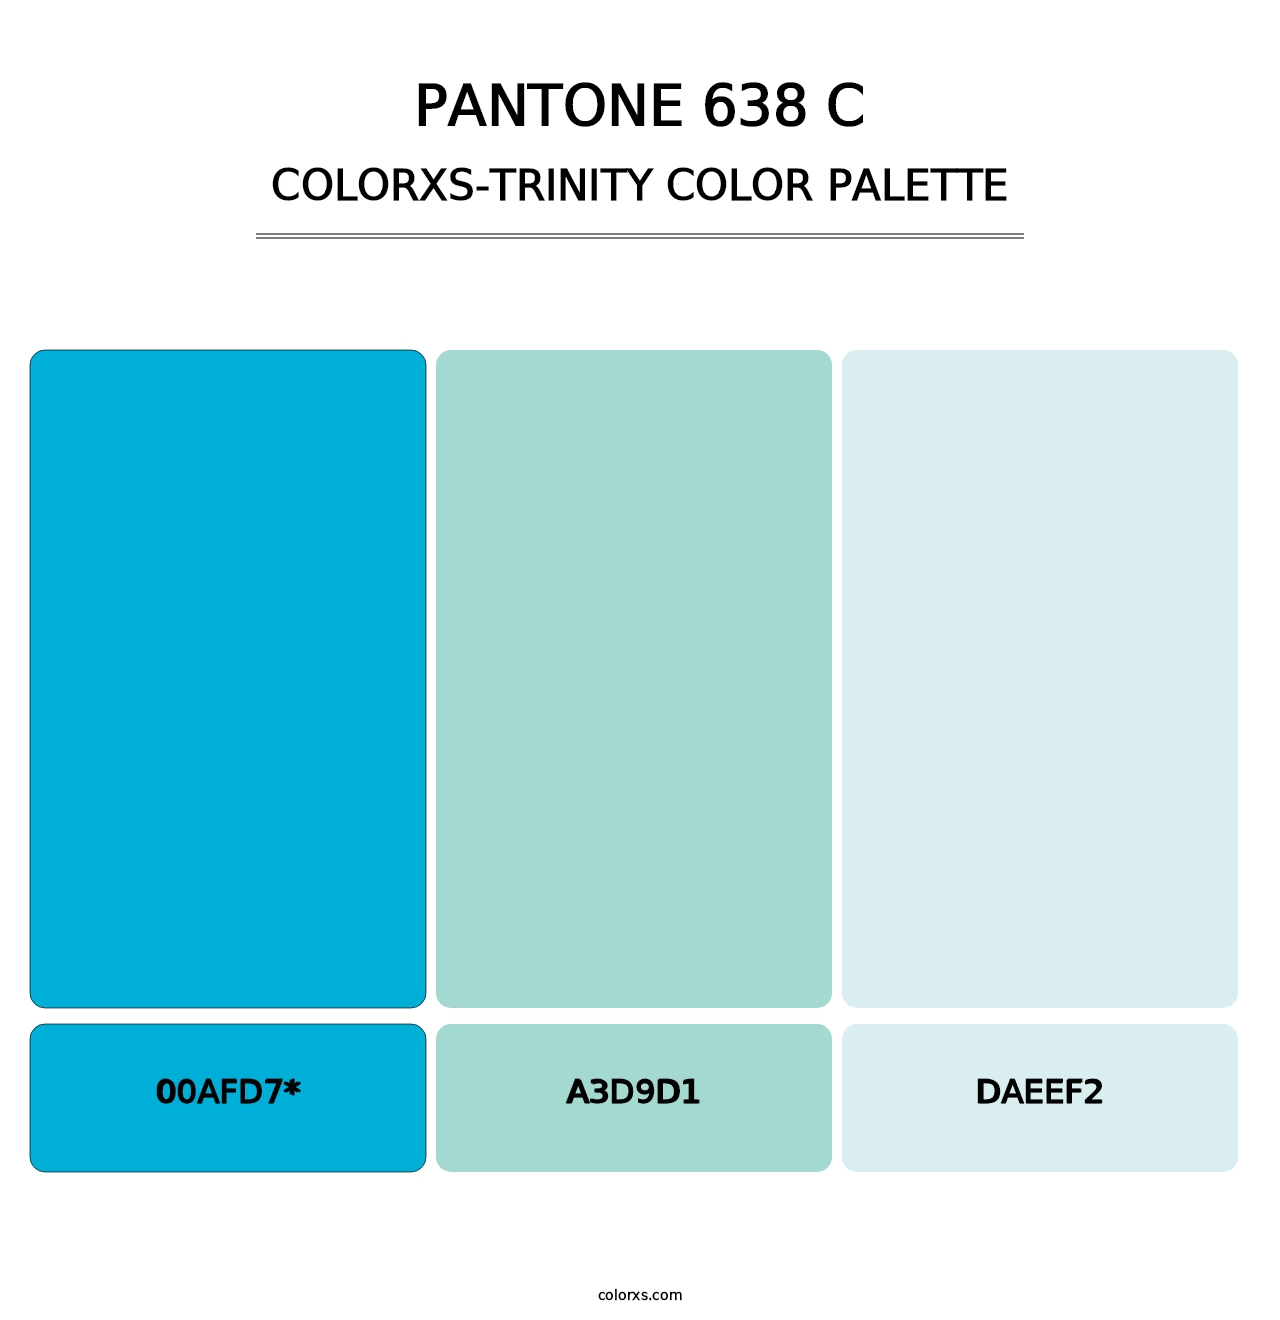 PANTONE 638 C - Colorxs Trinity Palette